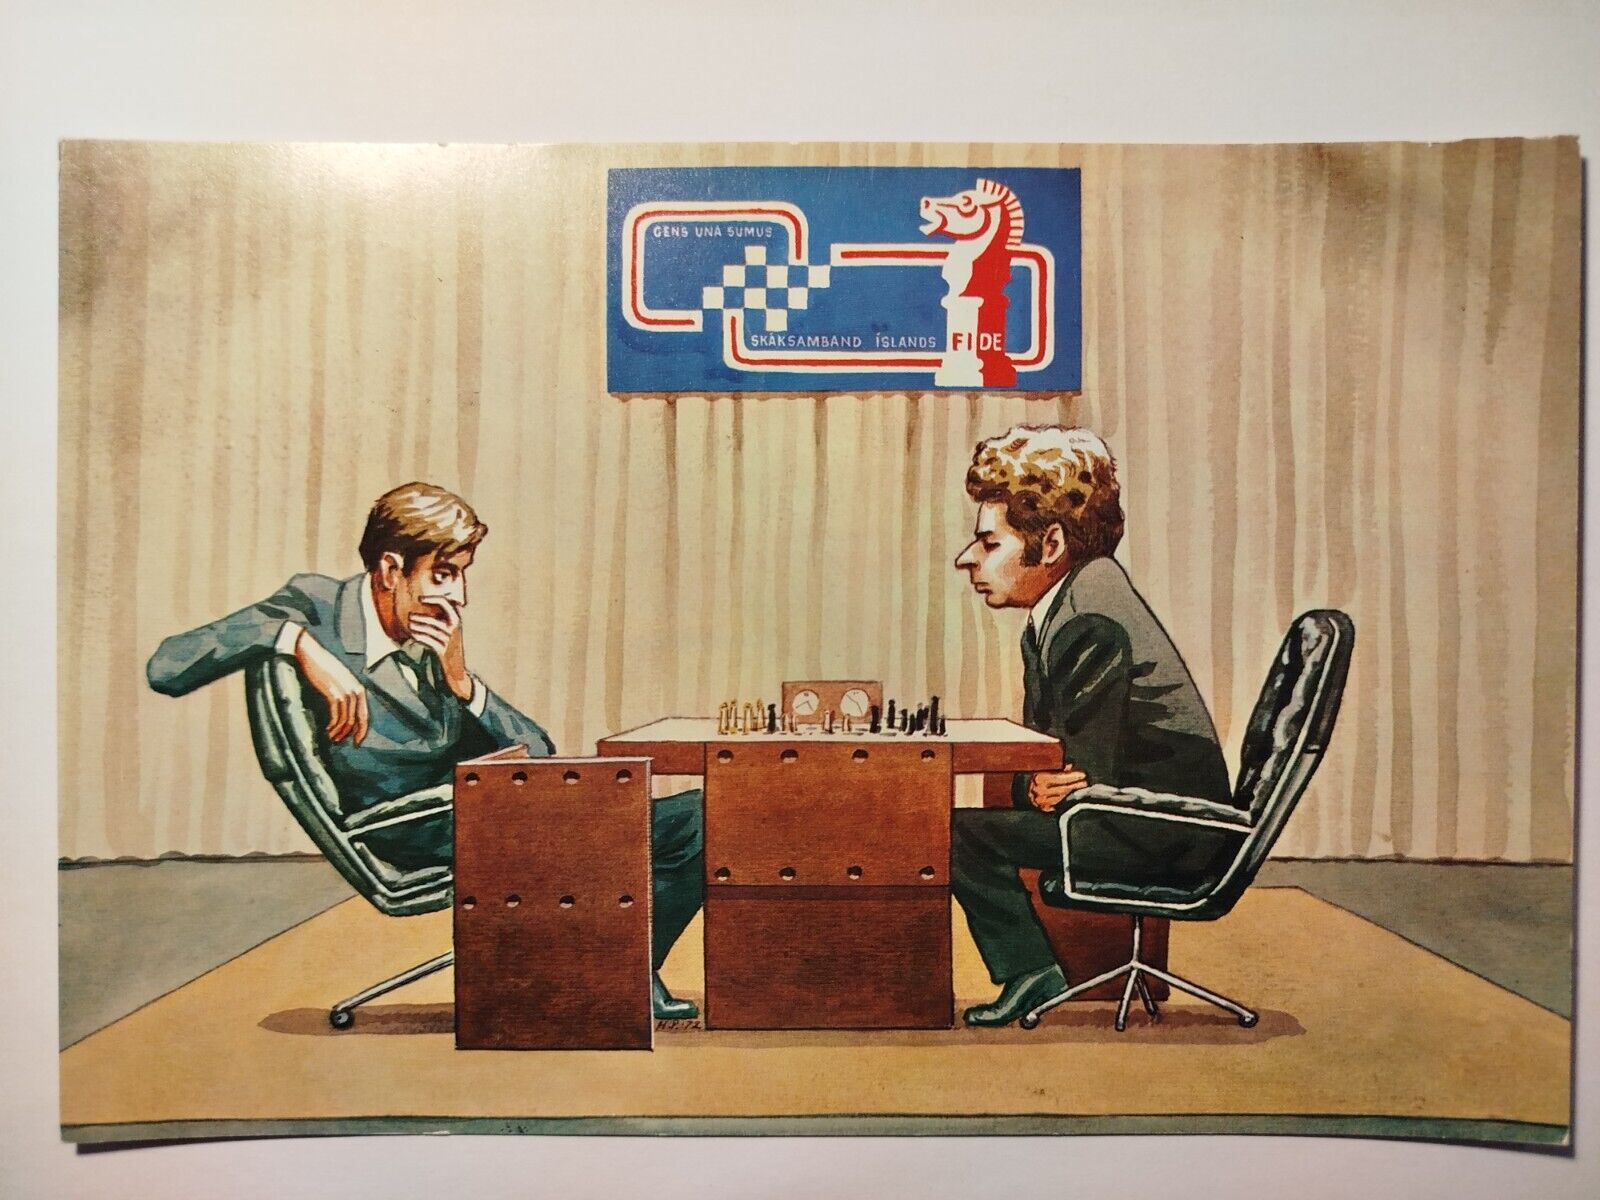 World chess championship 1972 - Bobby Fischer vs. Spassky large postcard Iceland